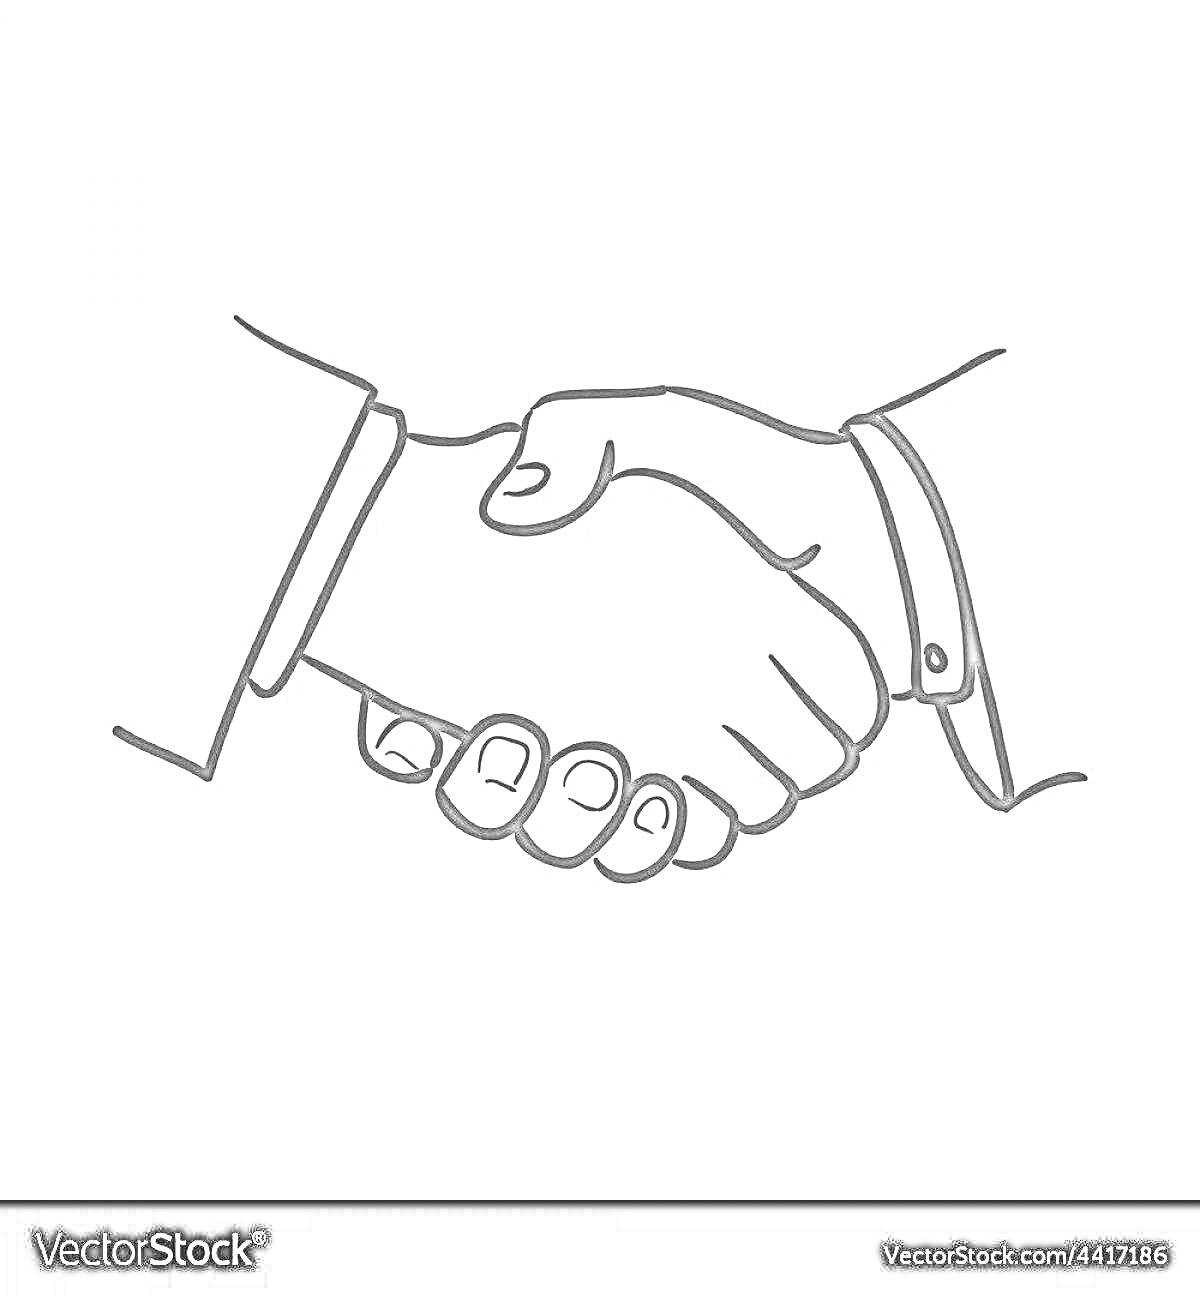 На раскраске изображено: Рукопожатие, Две руки, Рубашки, Дружба, Сотрудничество, Оформление